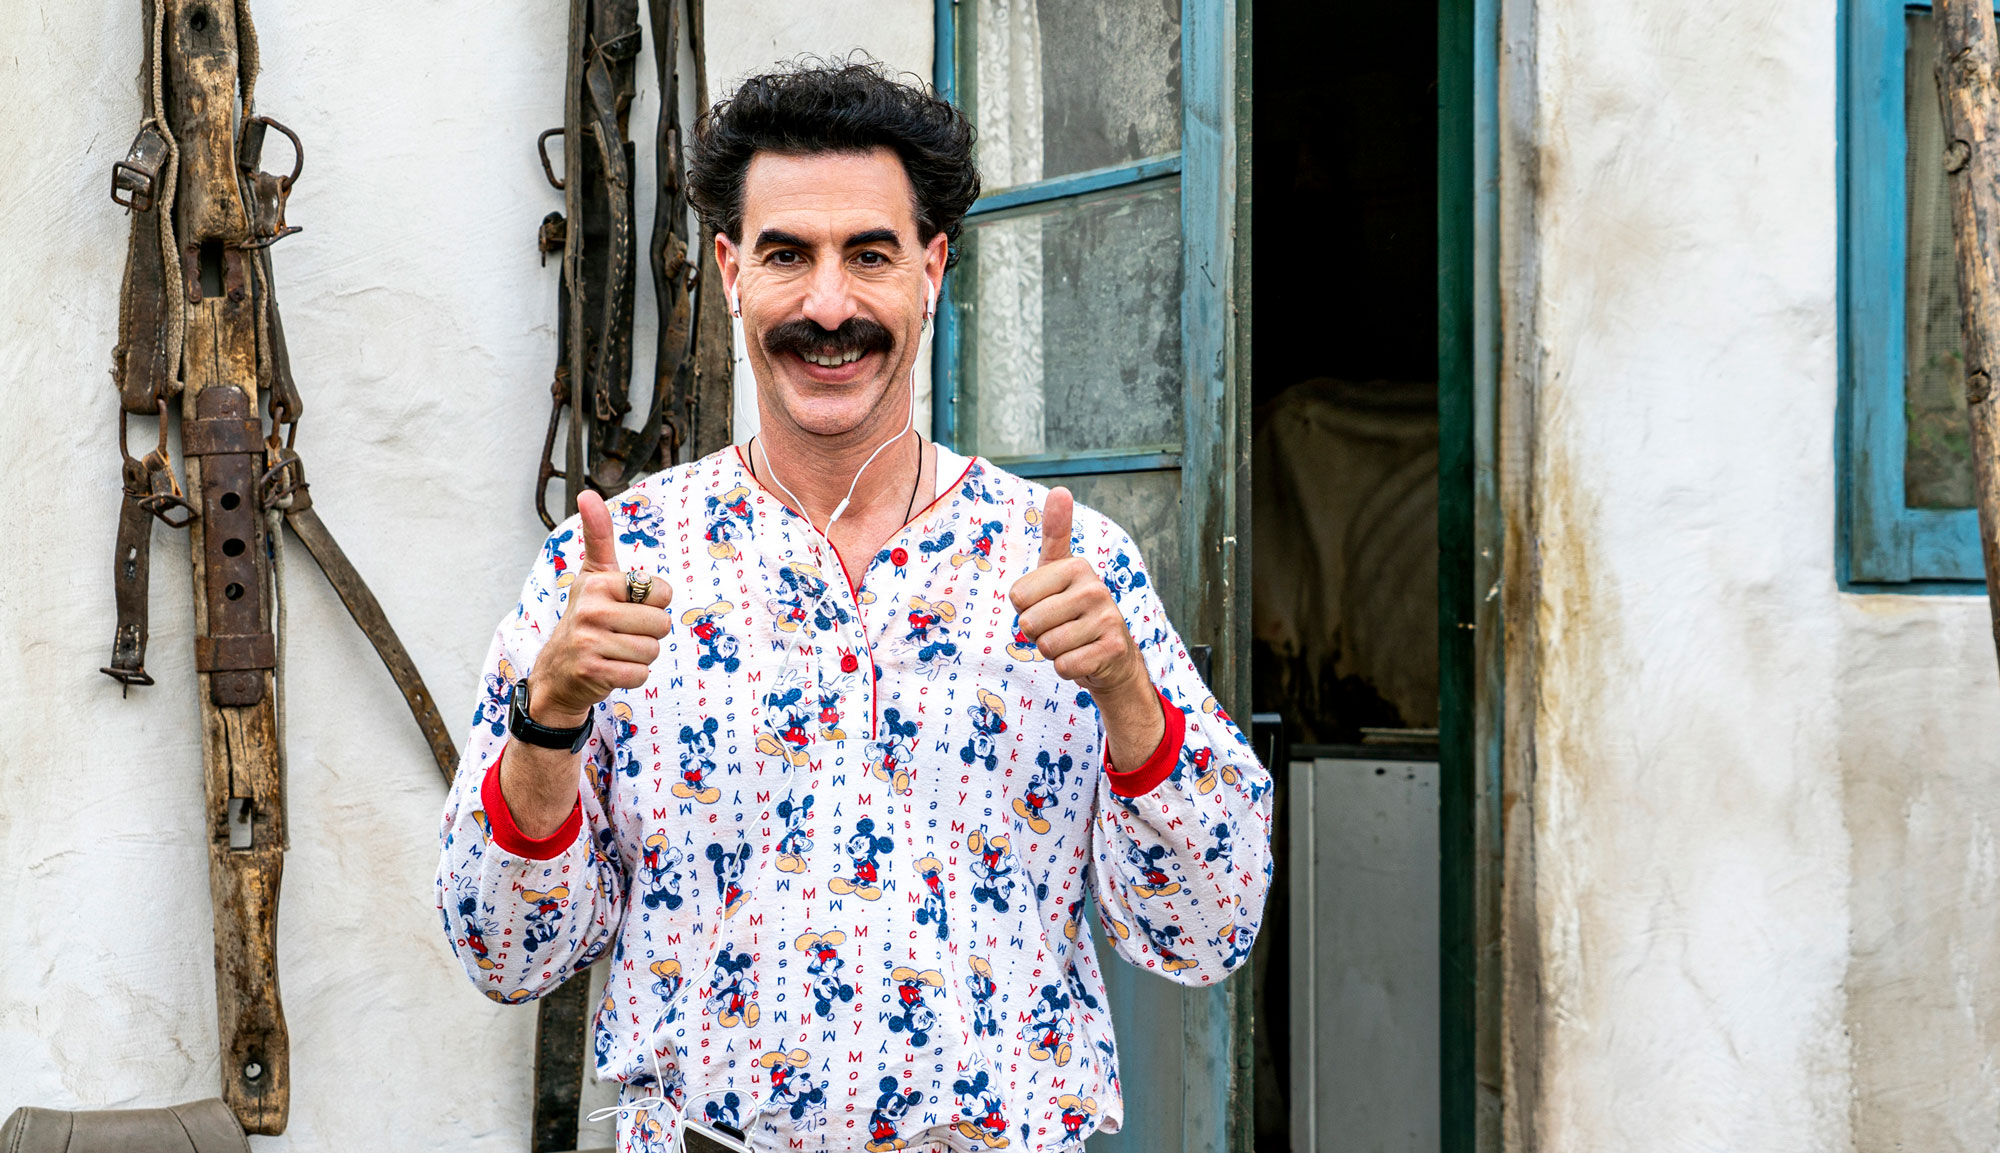 Sacha Baron Cohen in "Borat Subsequent Moviefilm"